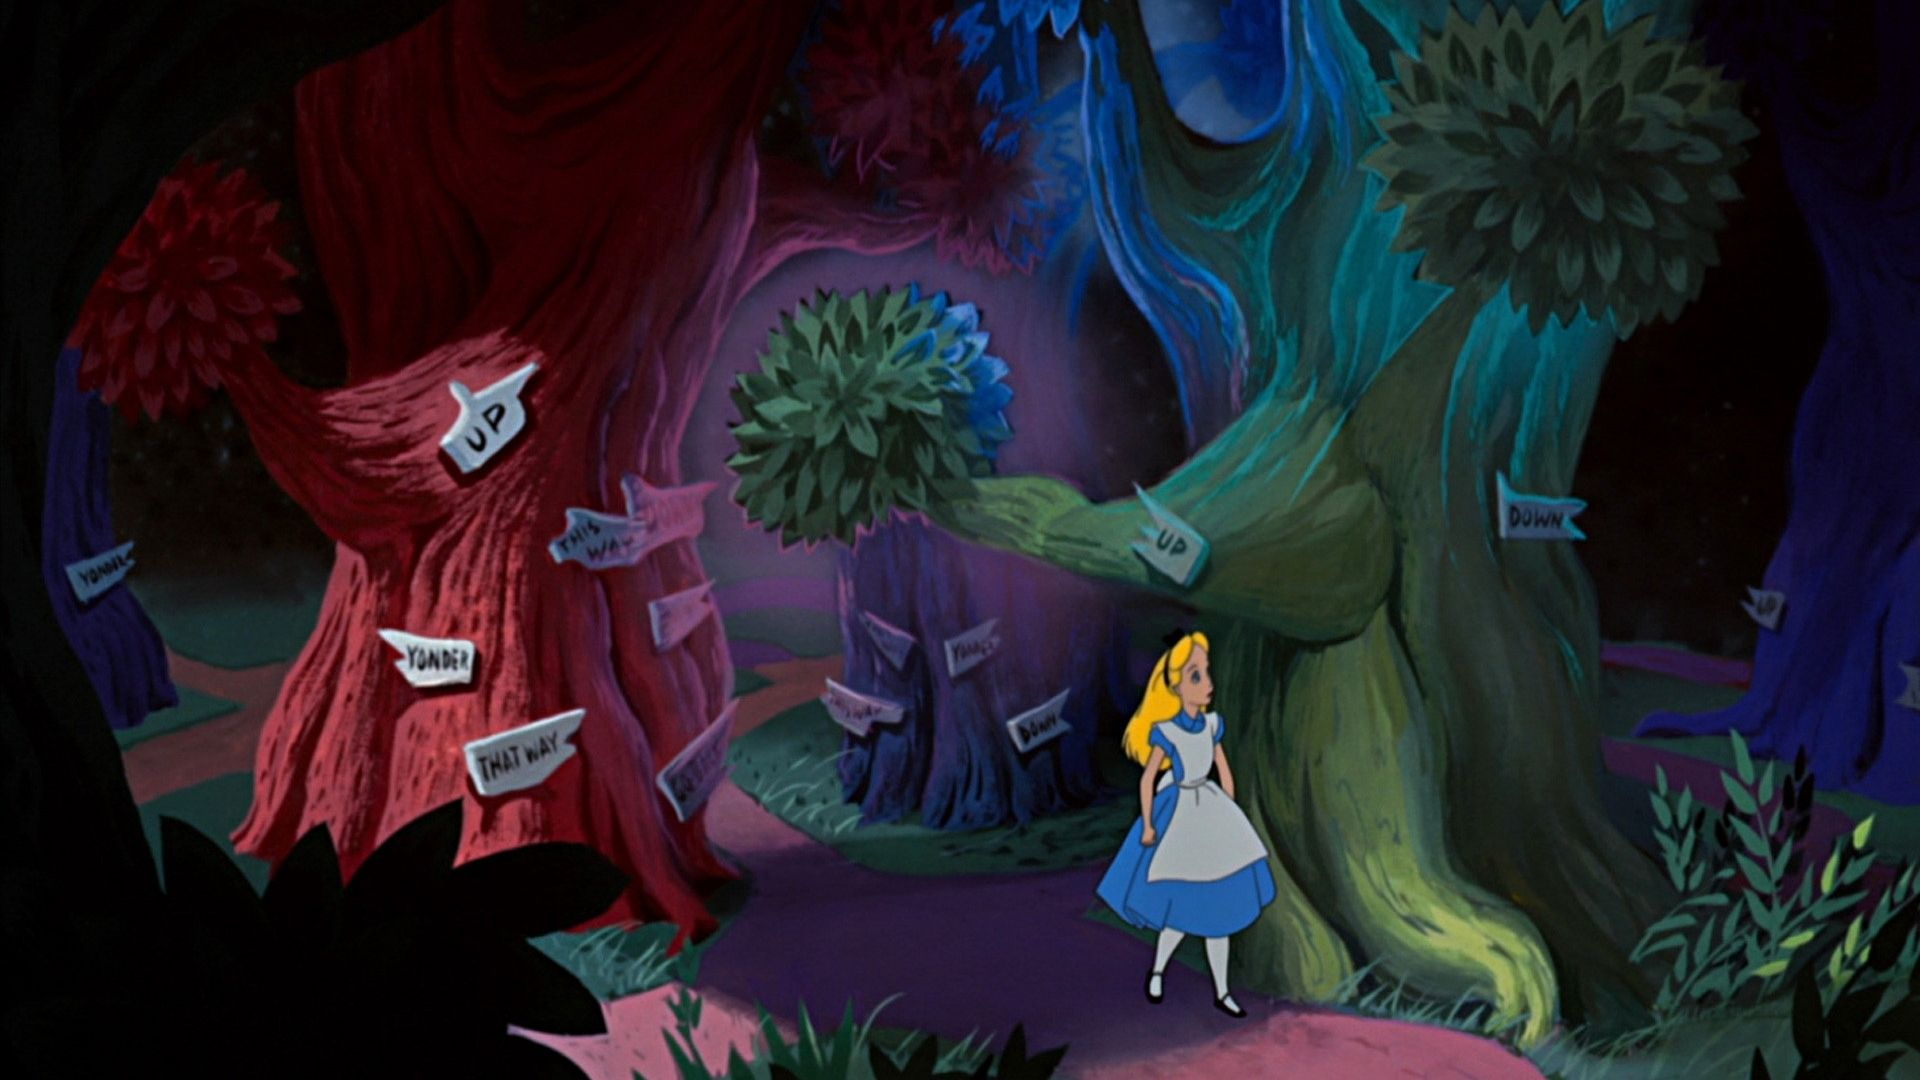 1920x1080 Alice in Wonderland HD Wallpapers Top Free Alice in Wonderland HD Backgrounds